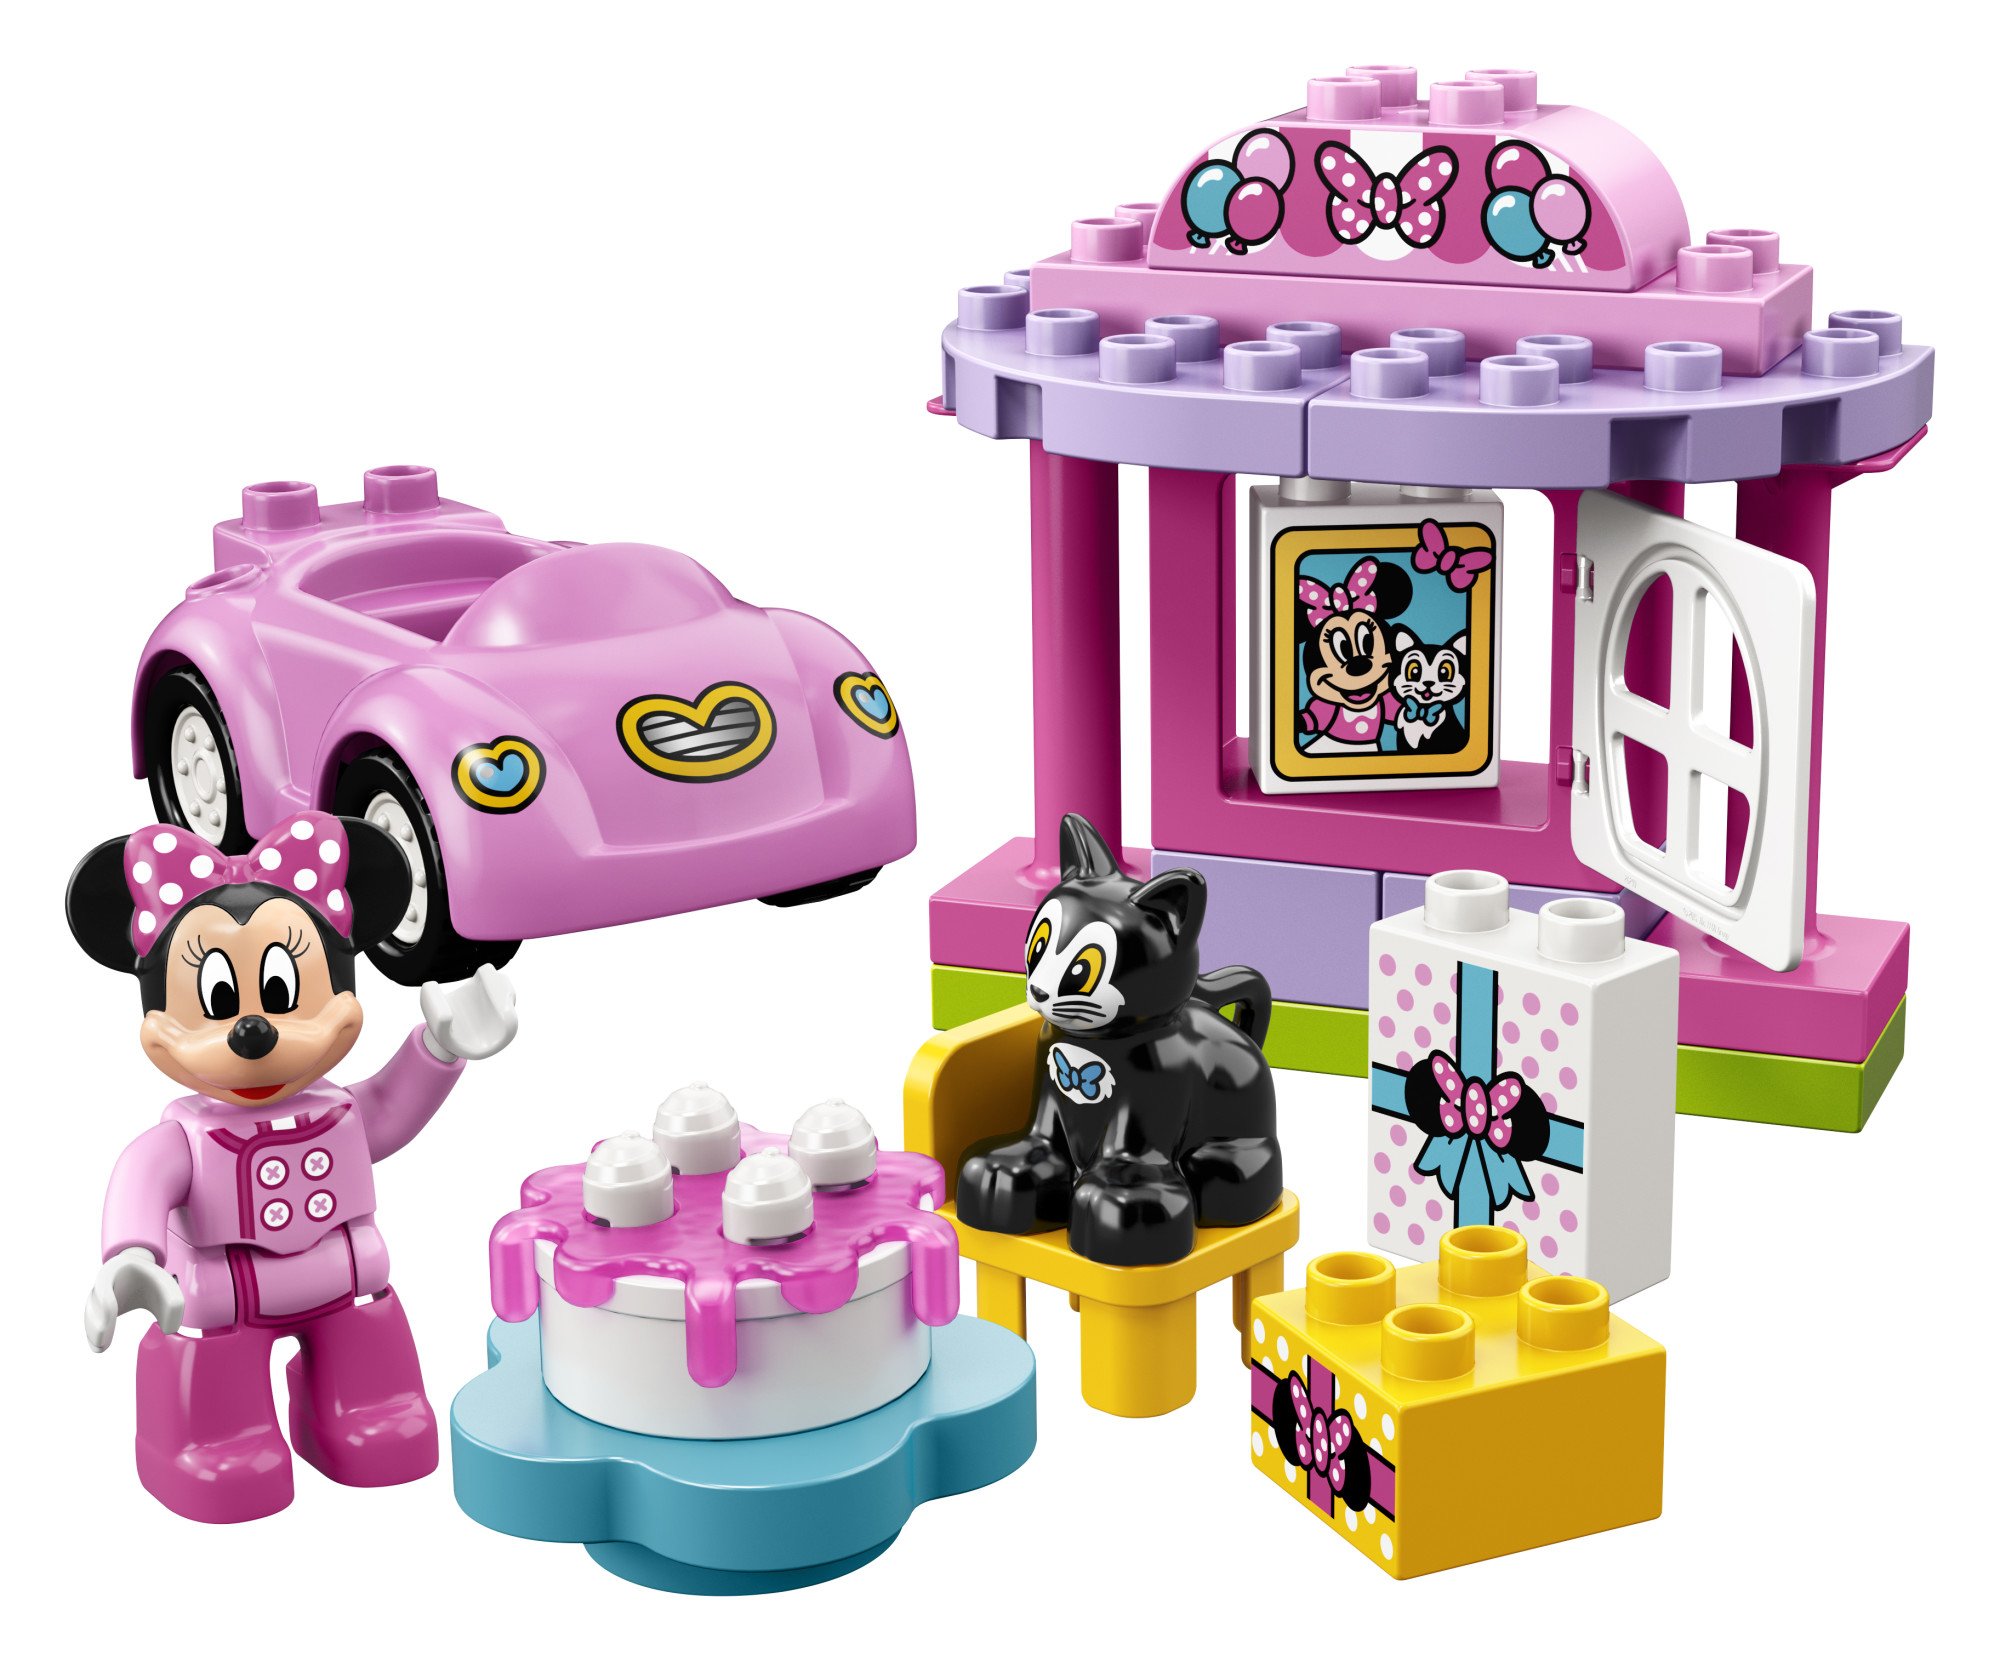 LEGO DUPLO Minnie's Birthday Party 10873 Building Blocks (21 Pieces)